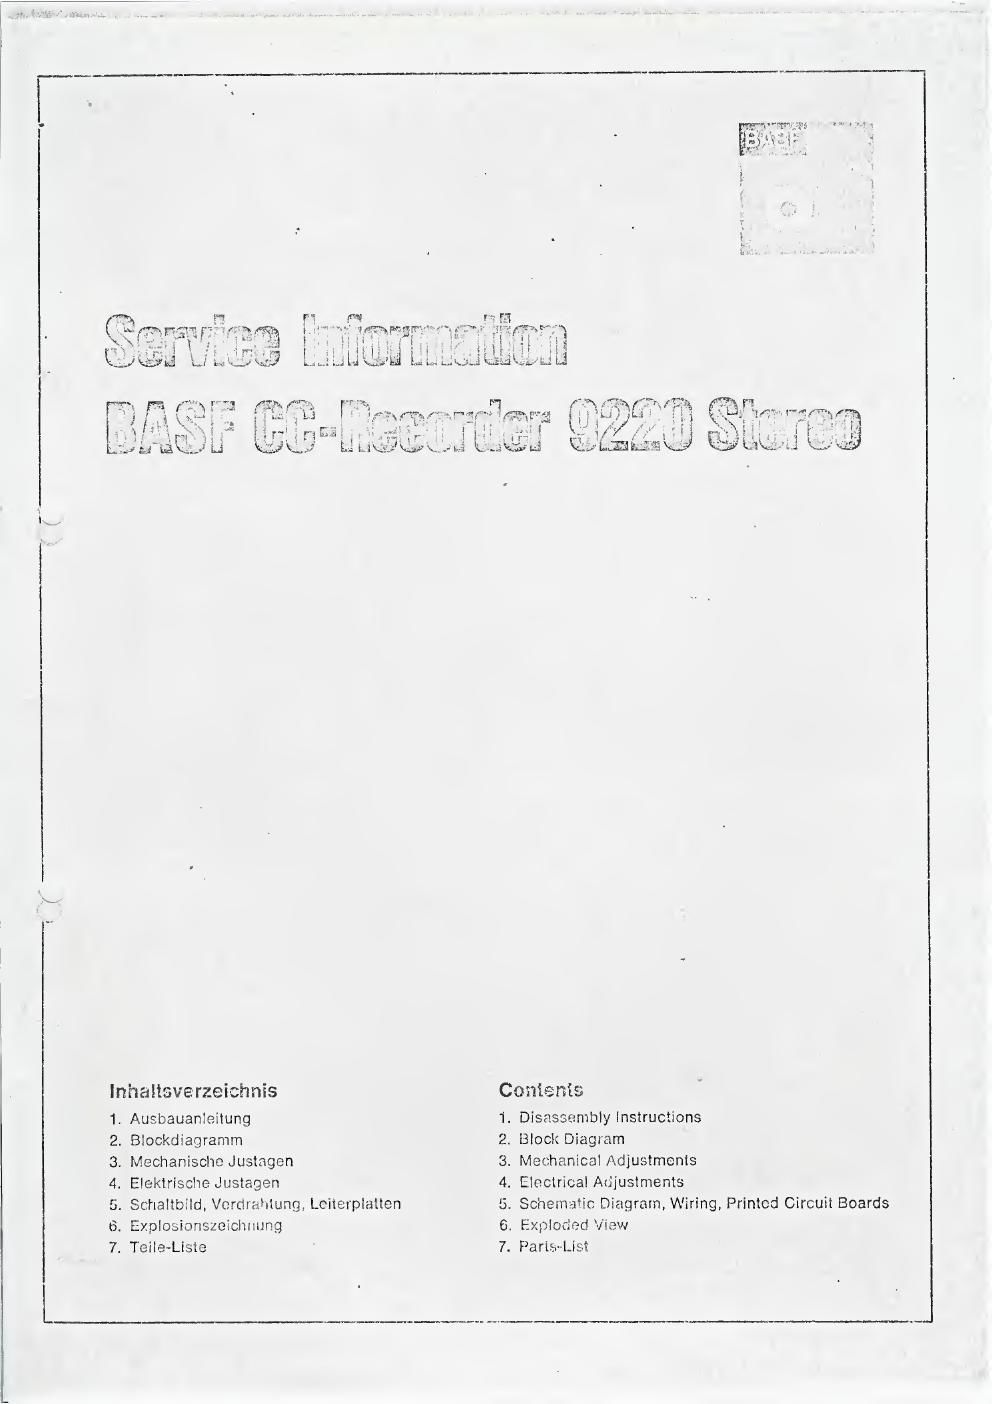 basf 9220 service manual